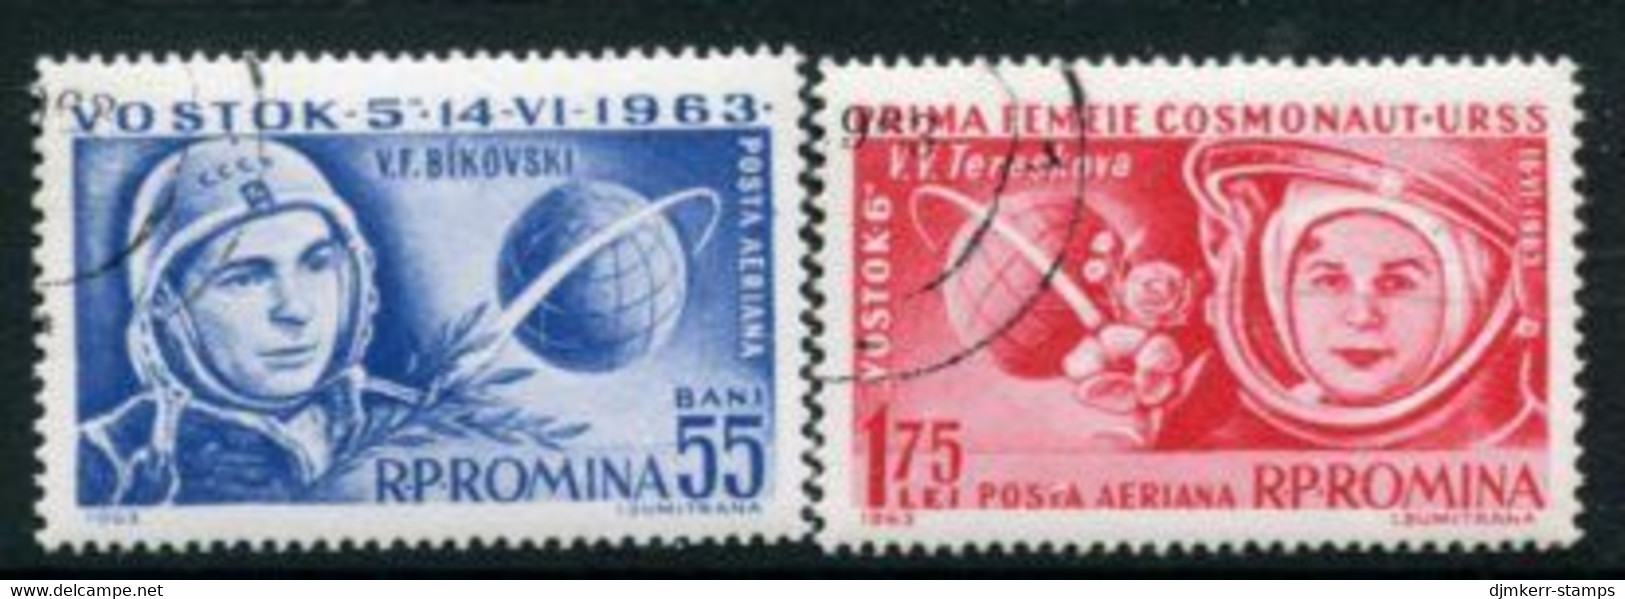 ROMANIA 1963 Vostok 5 And 6 Space Flights Used.  Michel 2171-72 - Usado